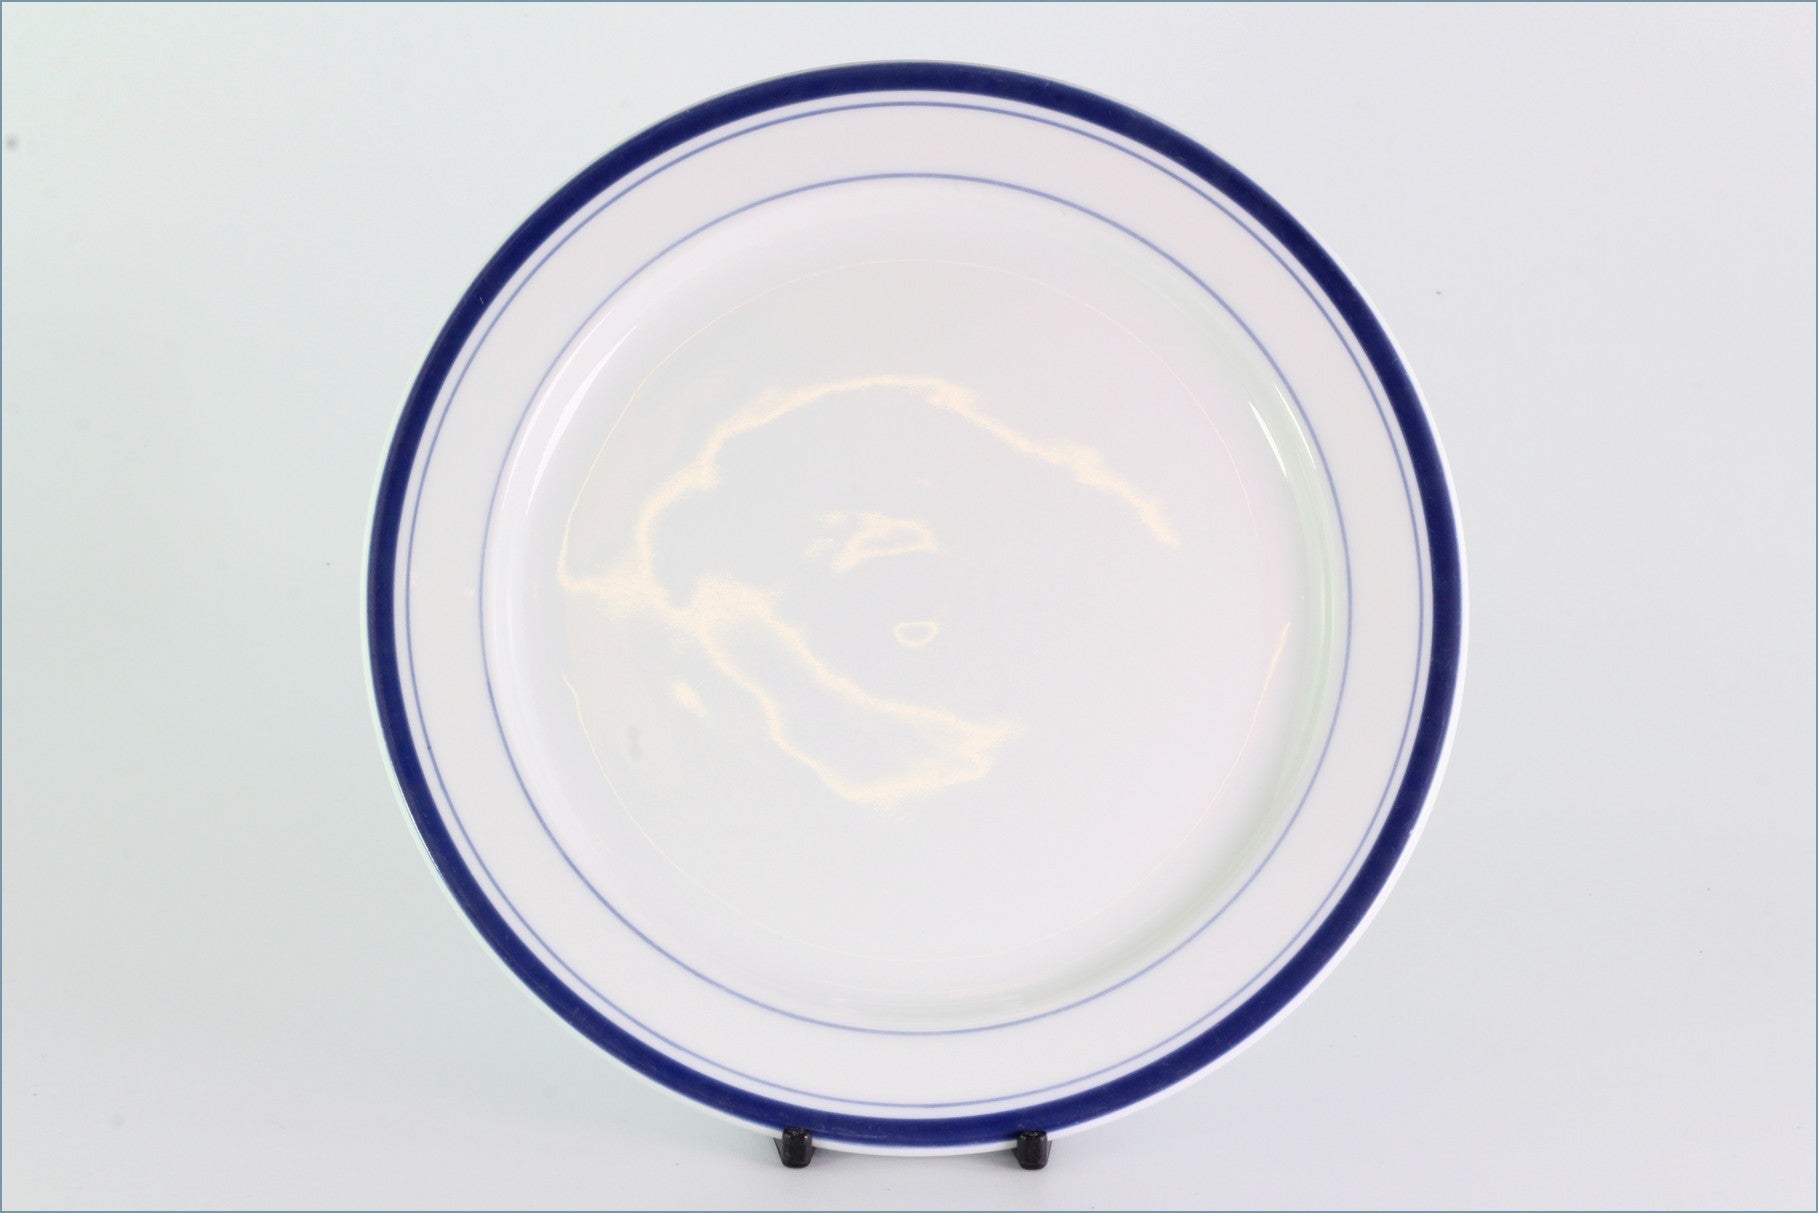 Habitat - Bistro (Blue) - 7 7/8" Salad Plate